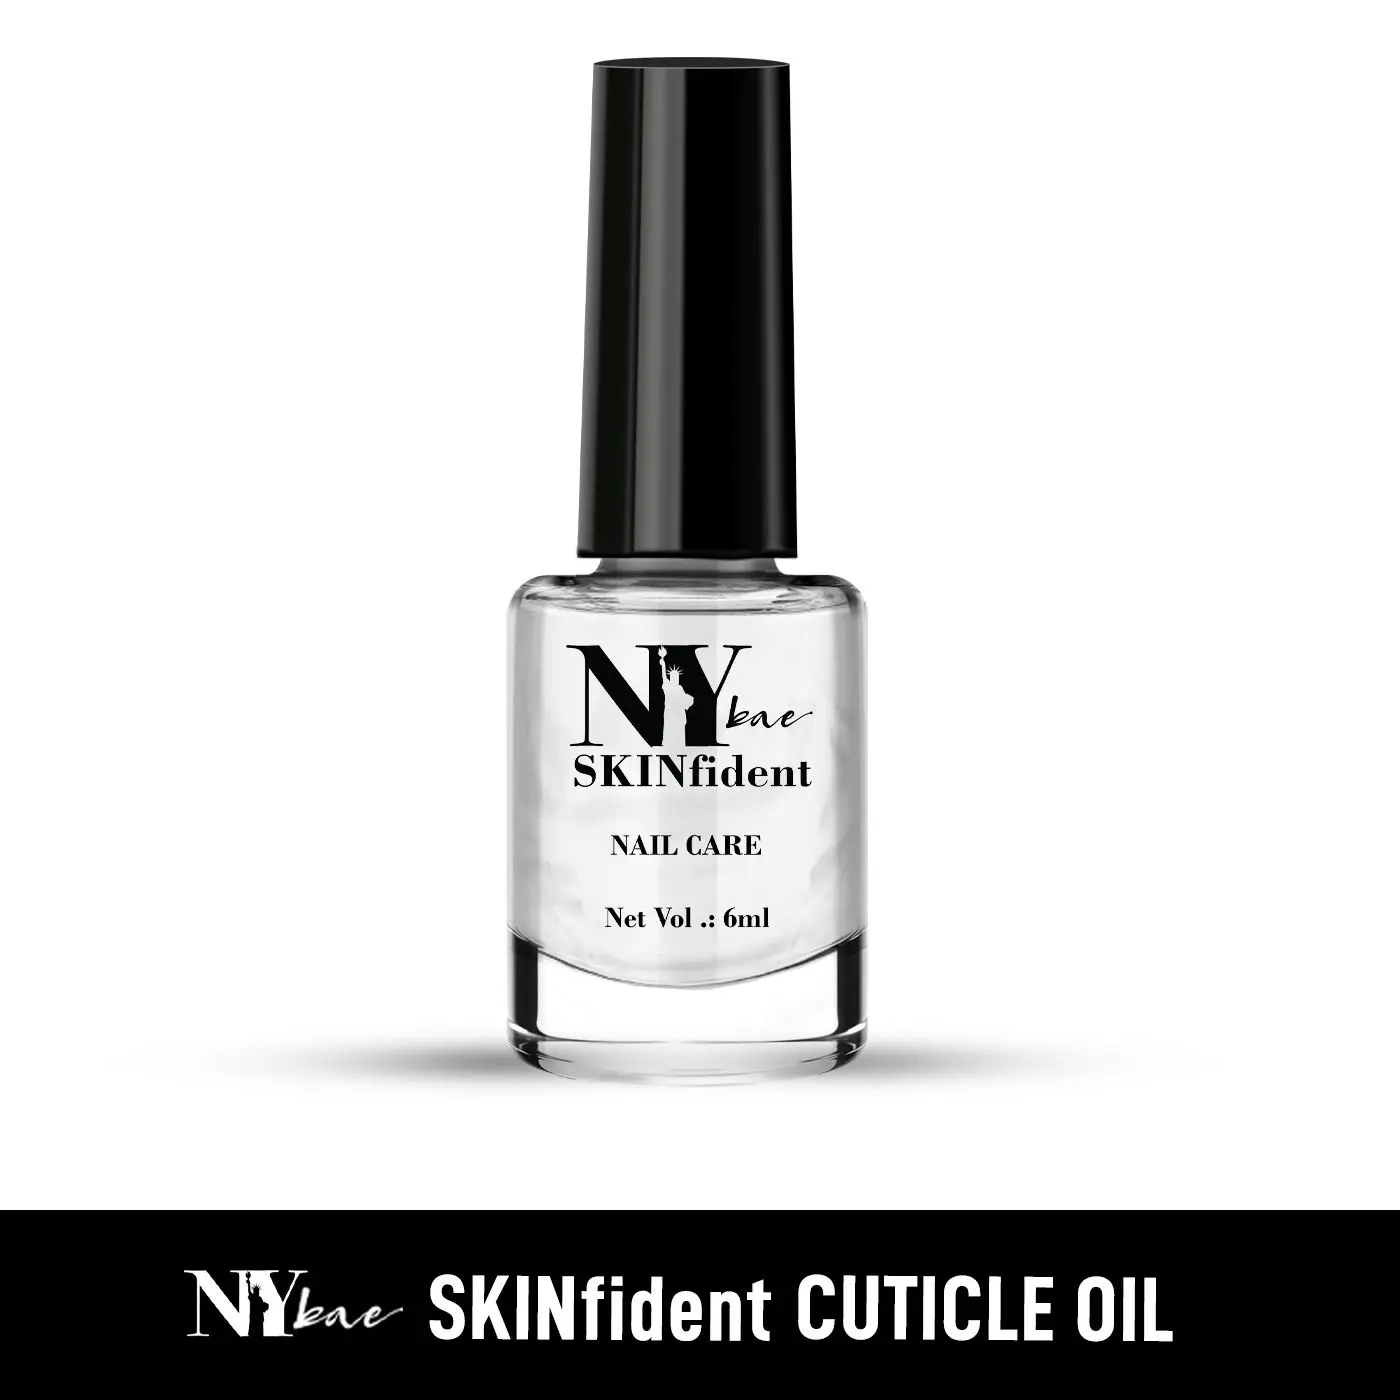 NY Bae SKINfident Nailin' it! Cuticle Oil (6 ml)